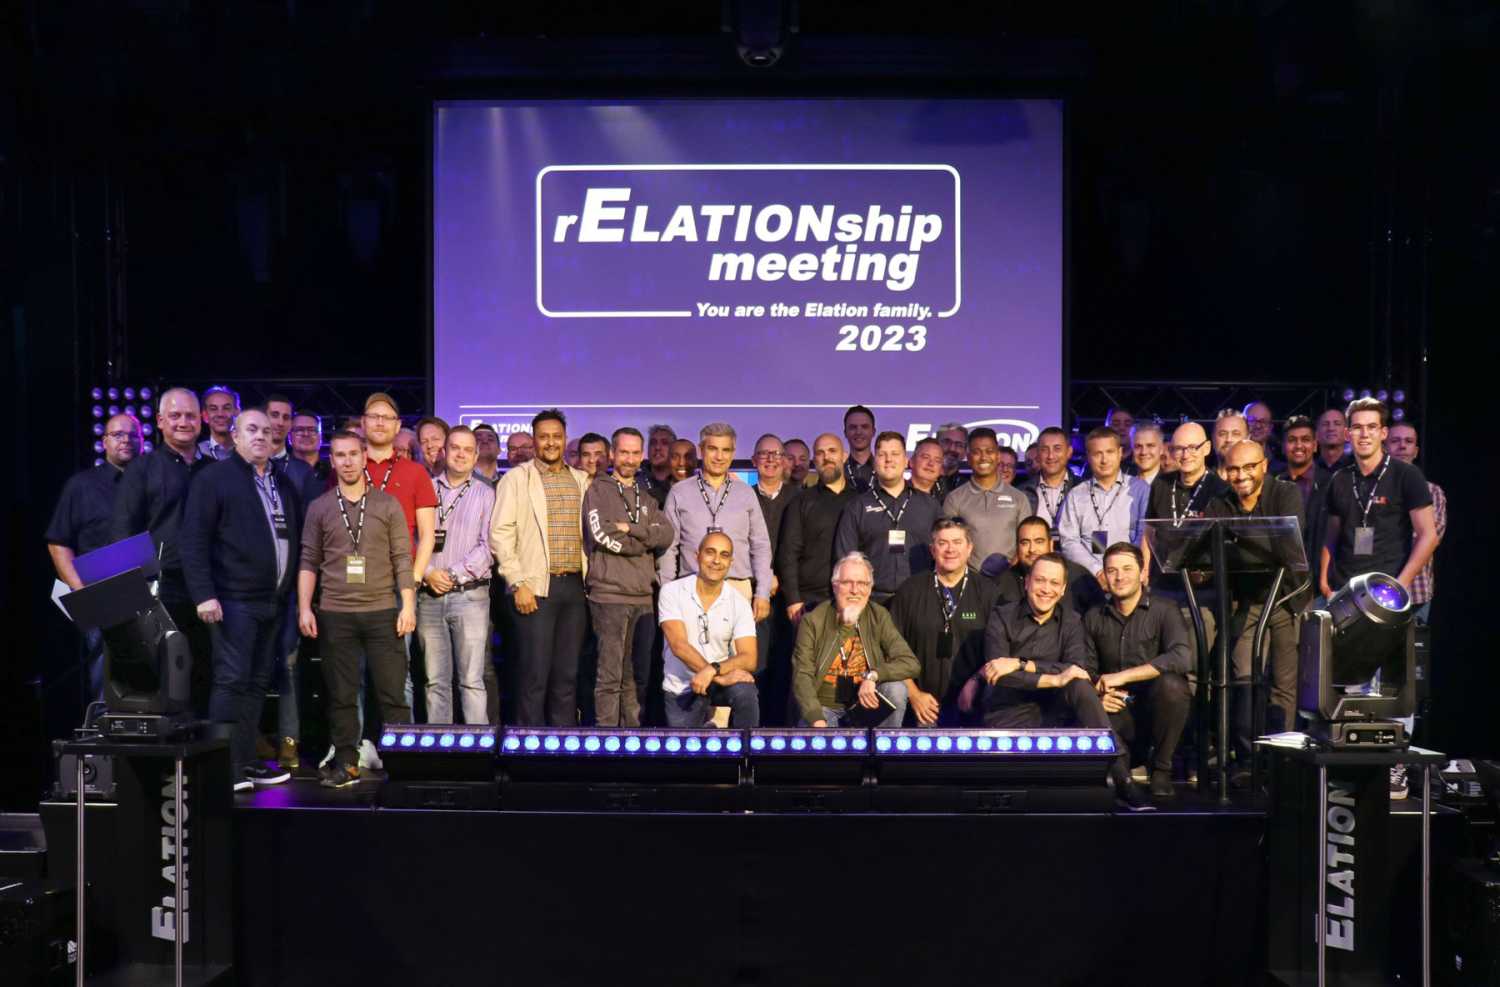 Over 60 representatives from Elation’s European partner network took part